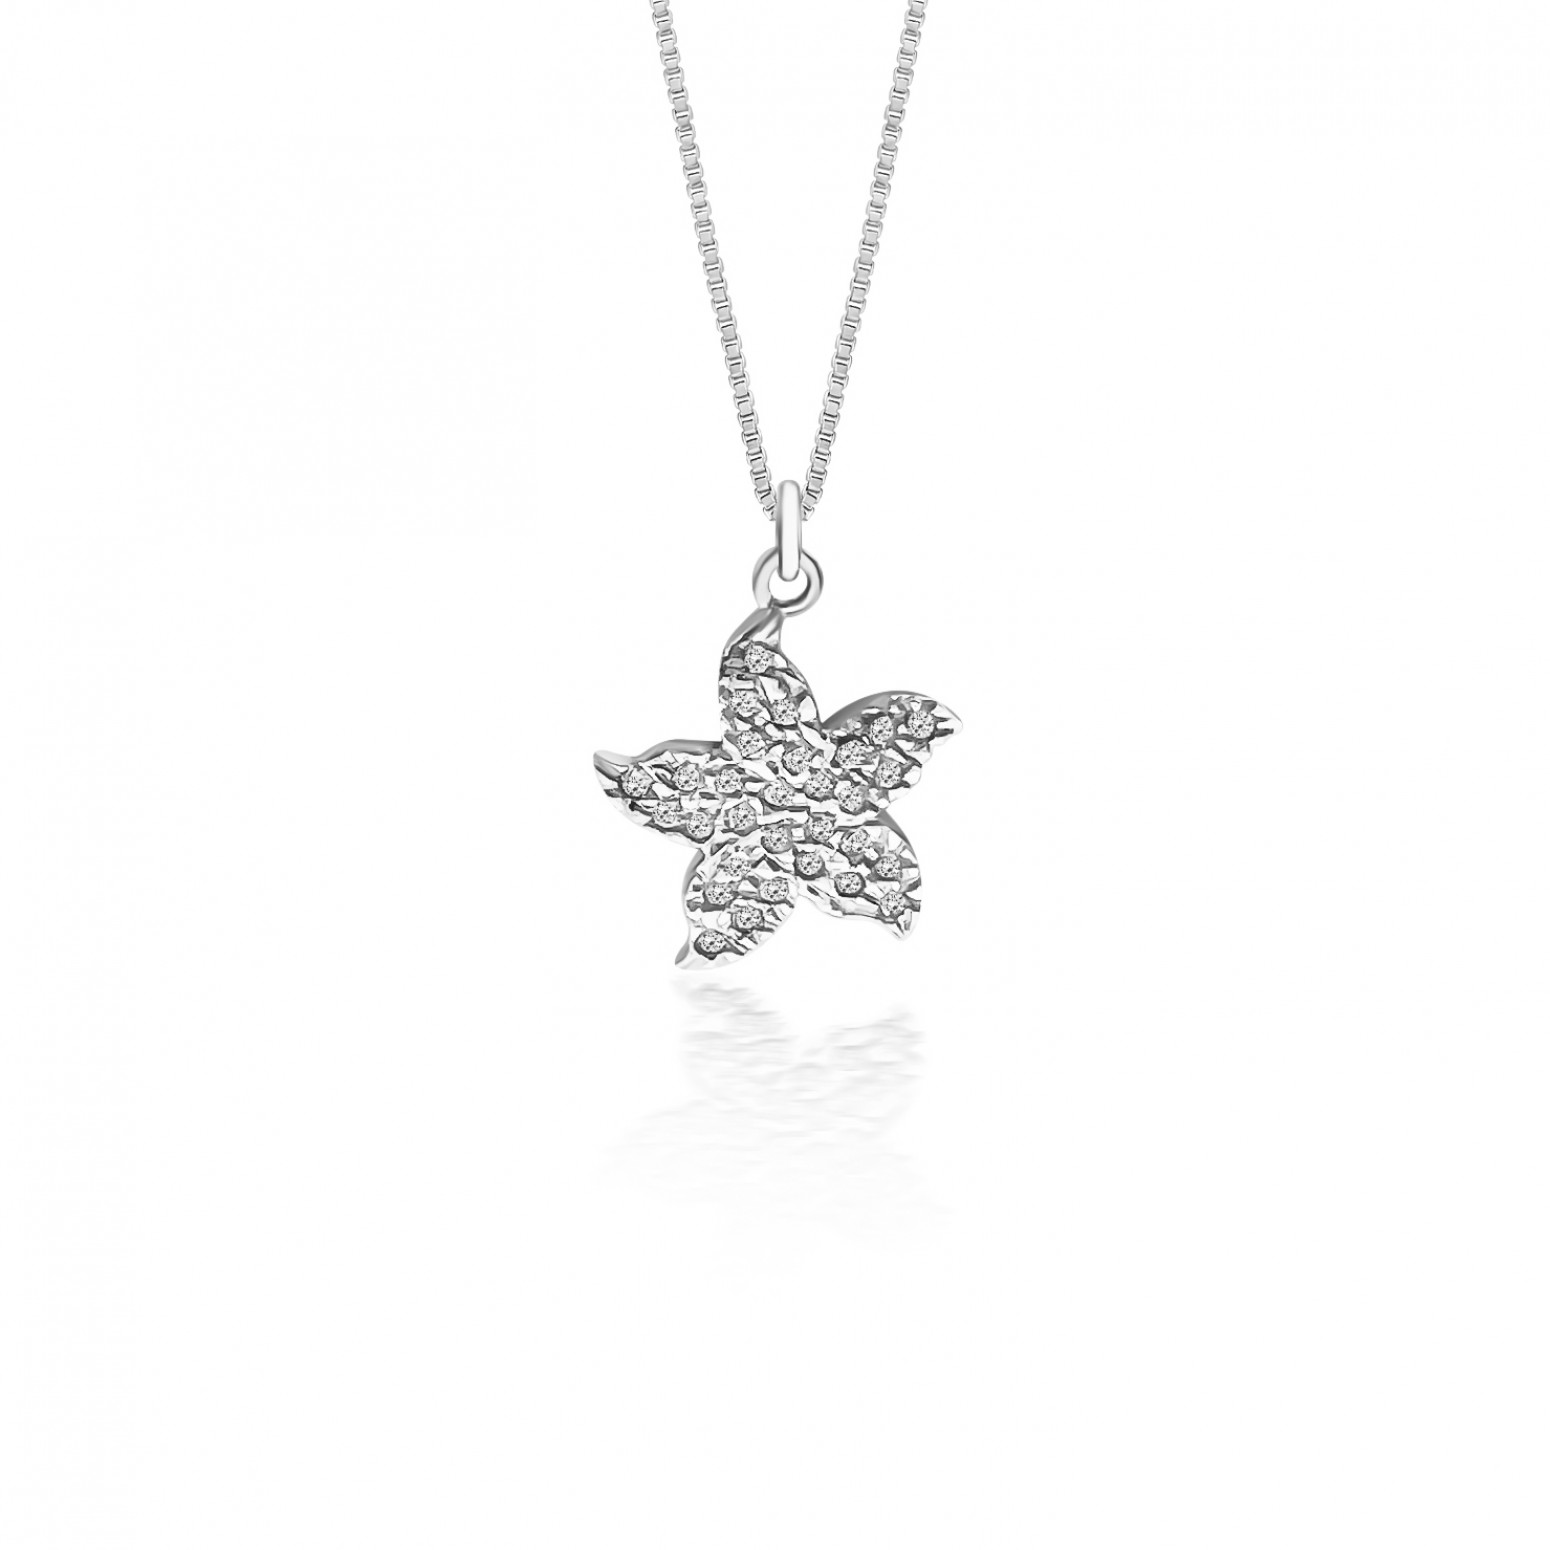 Starfish necklace, Κ14 white gold with zircon, ko1750 NECKLACES Κοσμηματα - chrilia.gr